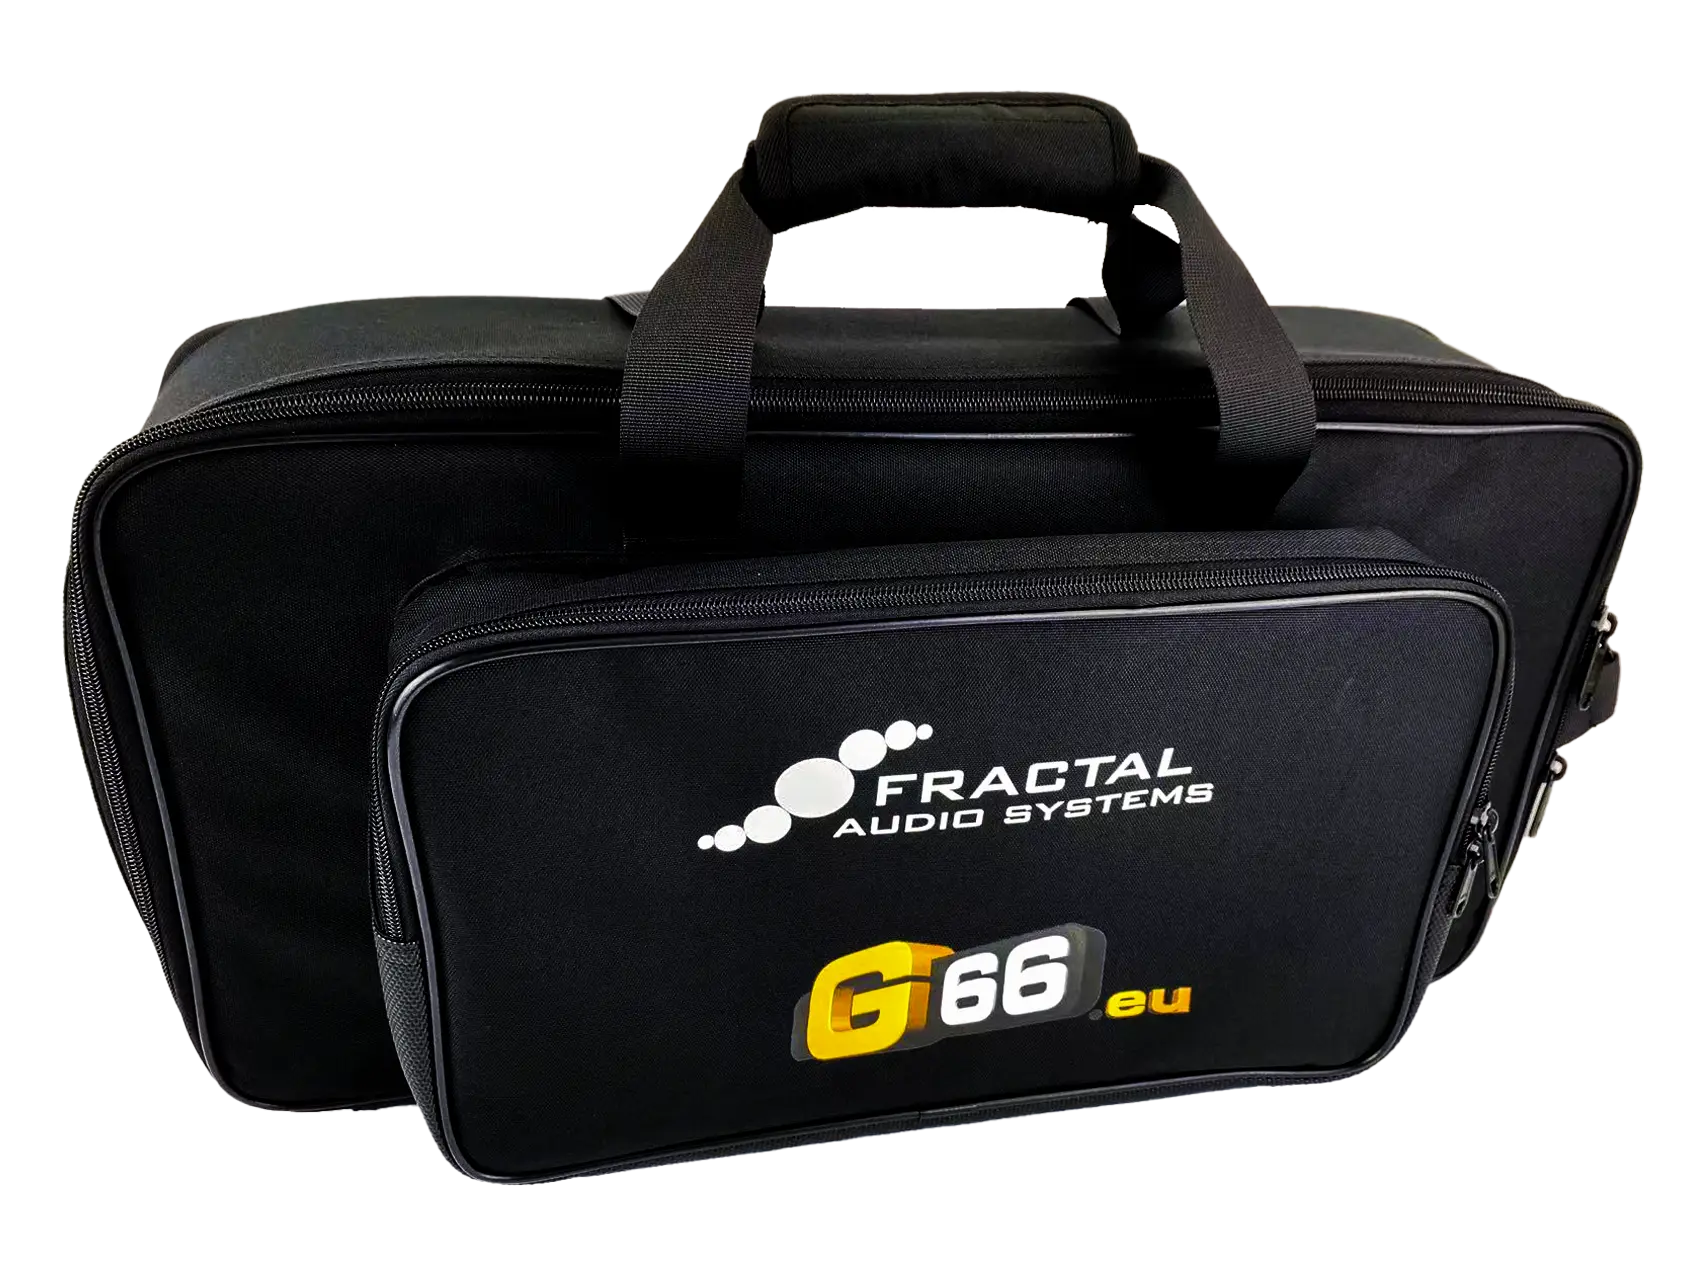 FM9 Bag